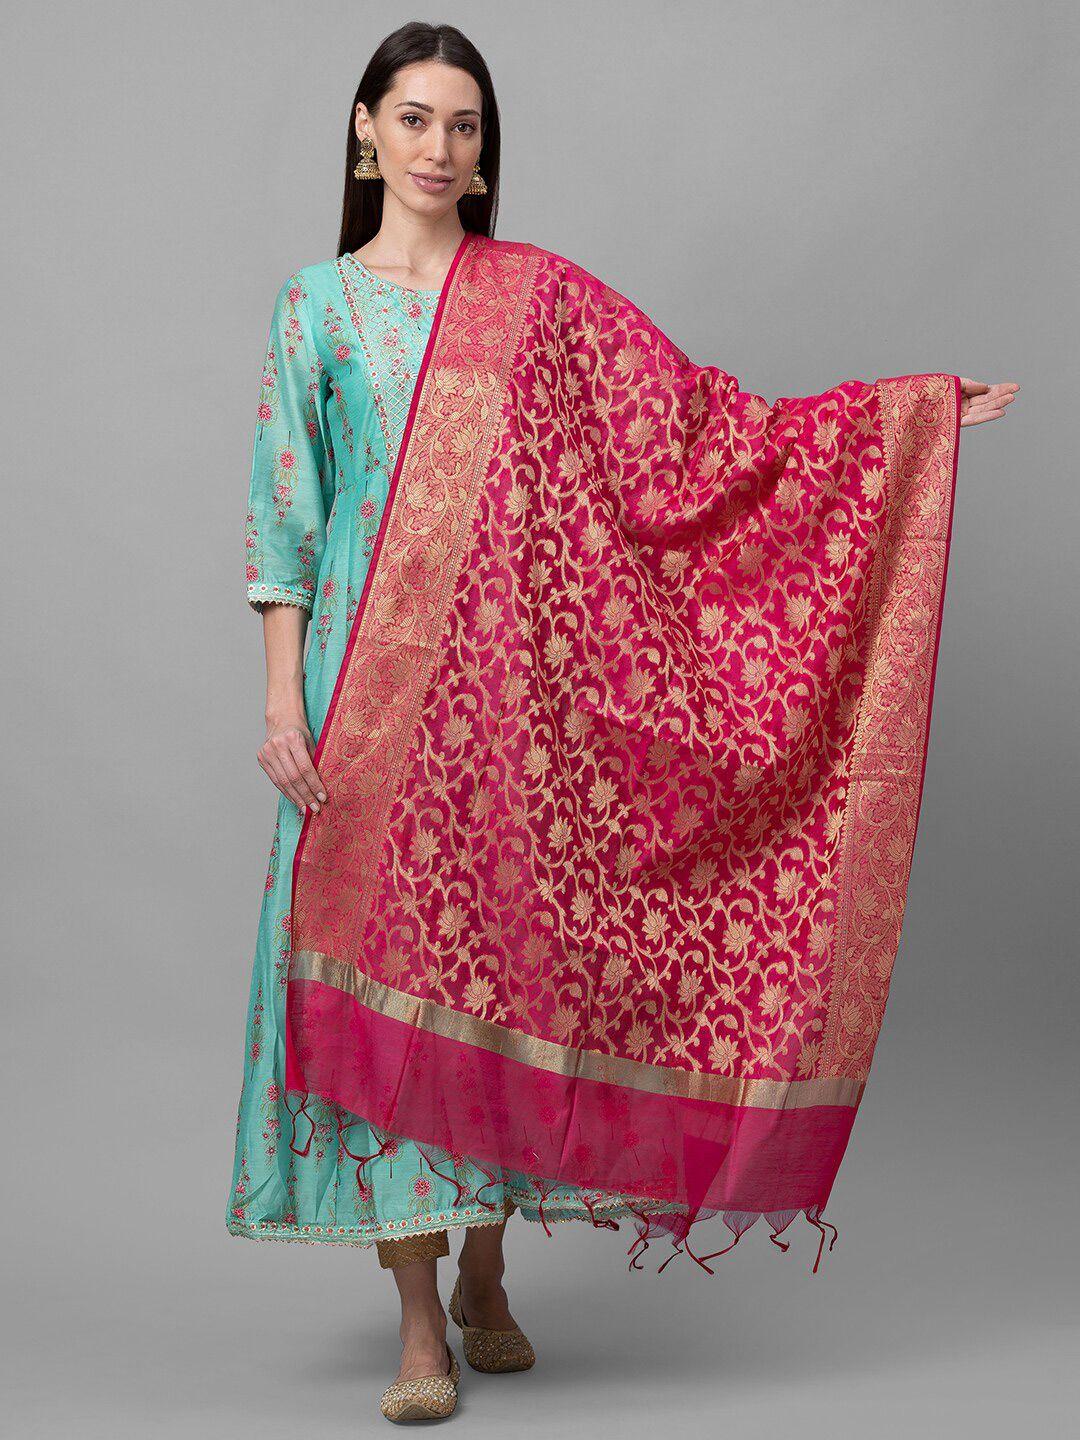 globus pink & gold-toned ethnic motifs woven design dupatta with zari